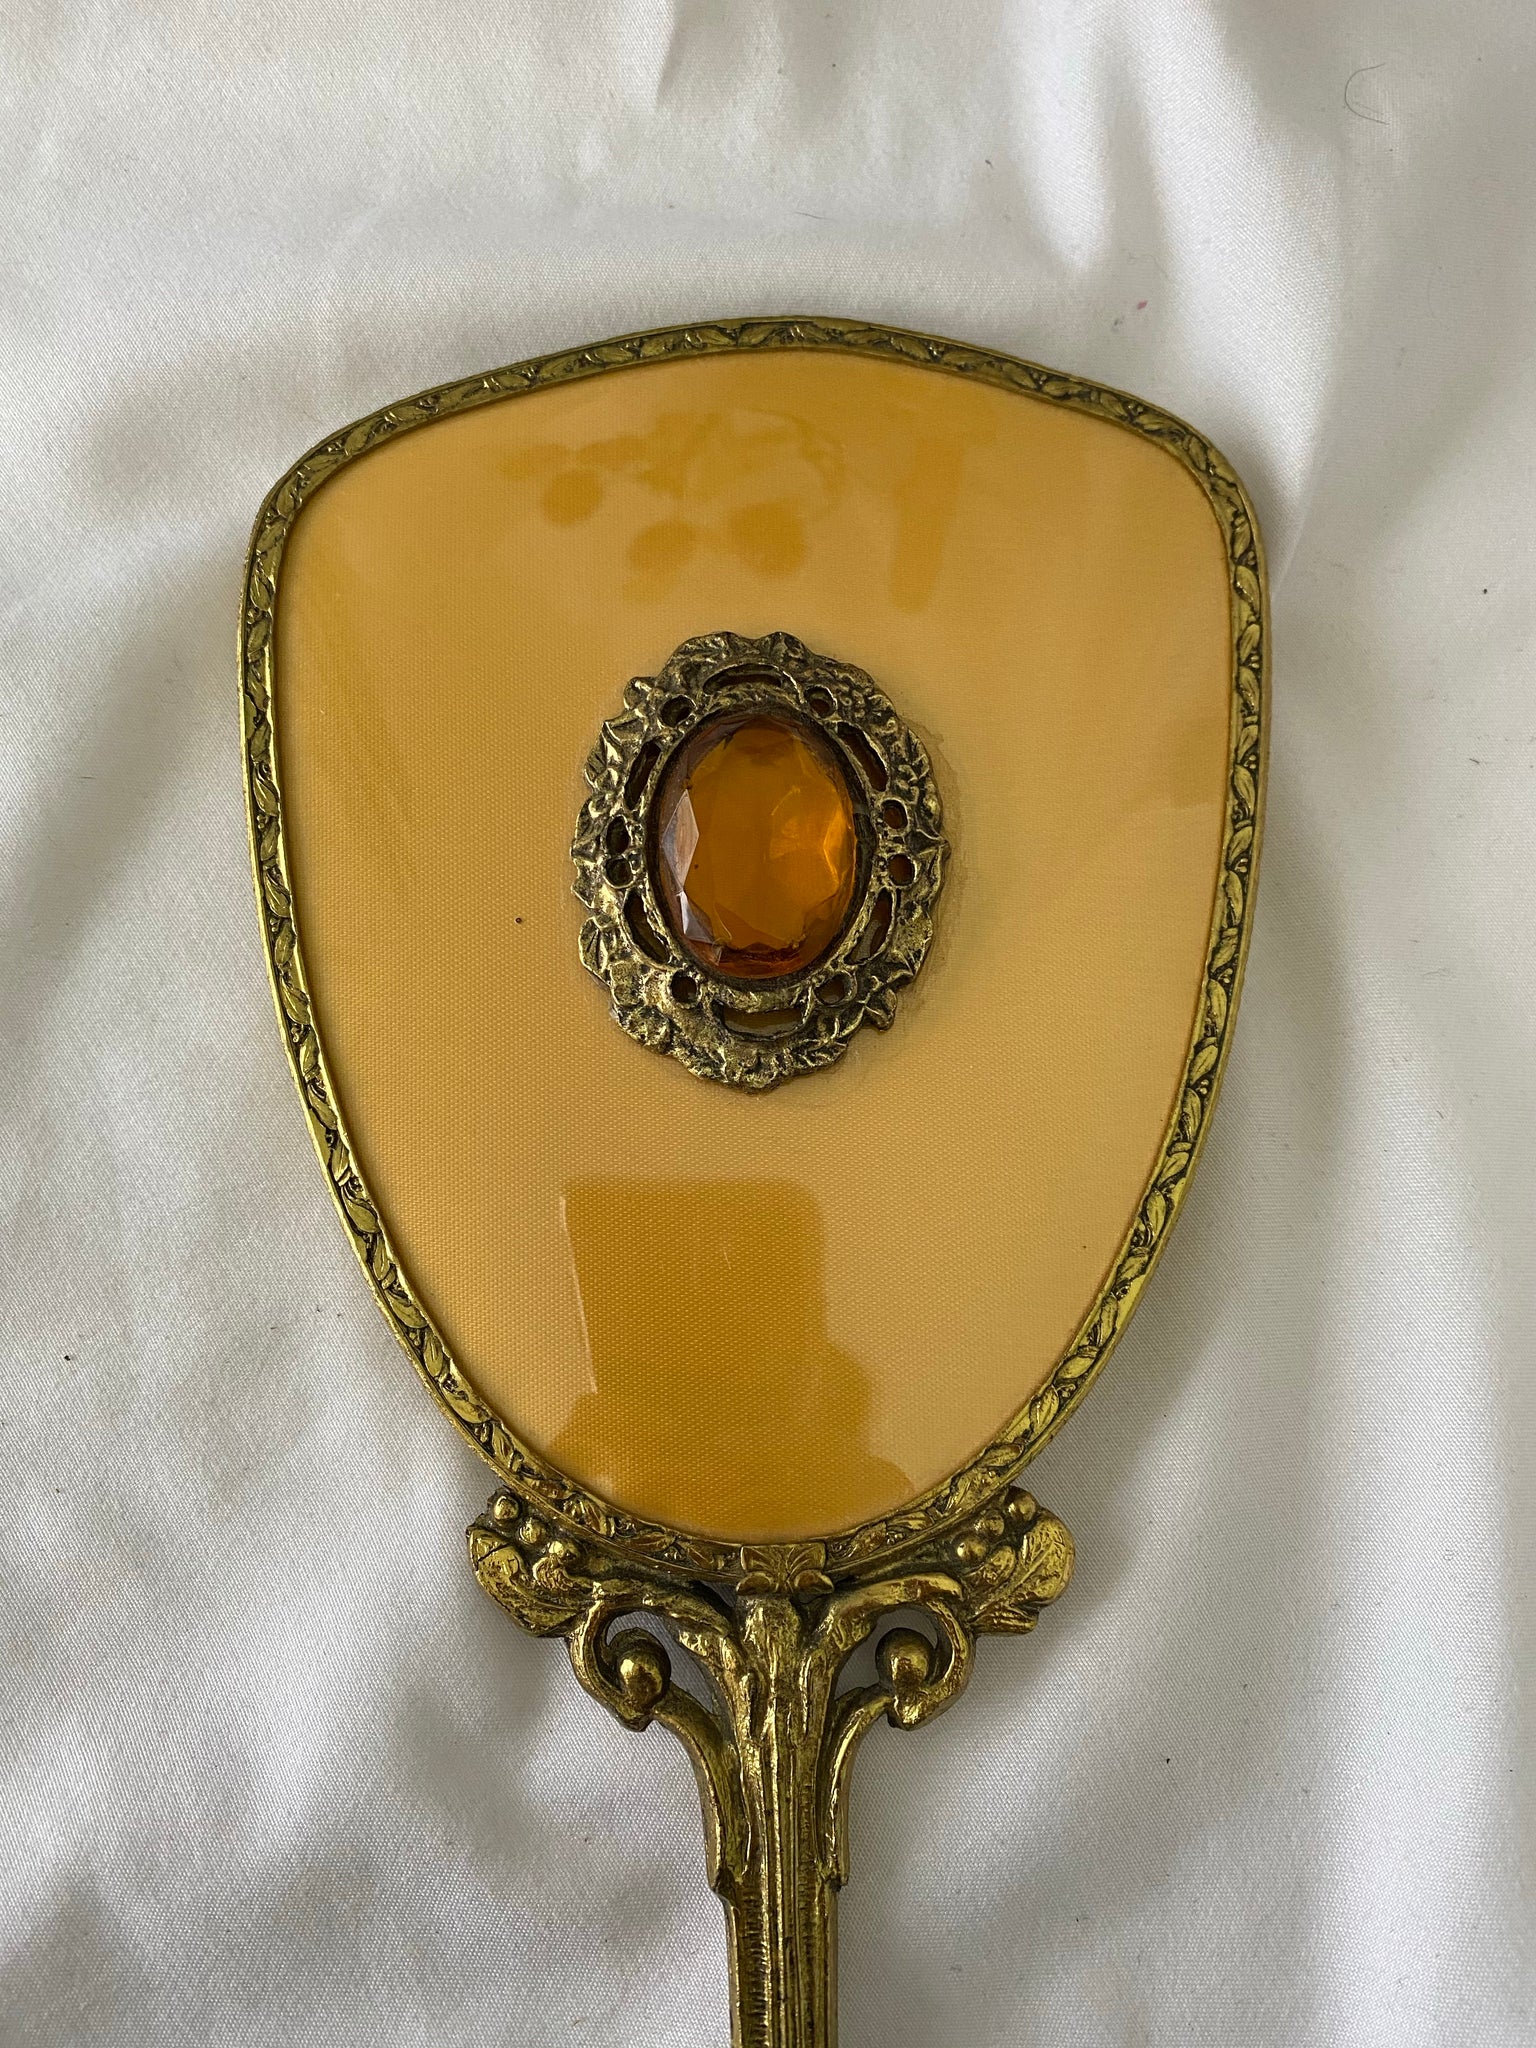 Beautiful antique ornate vanity set